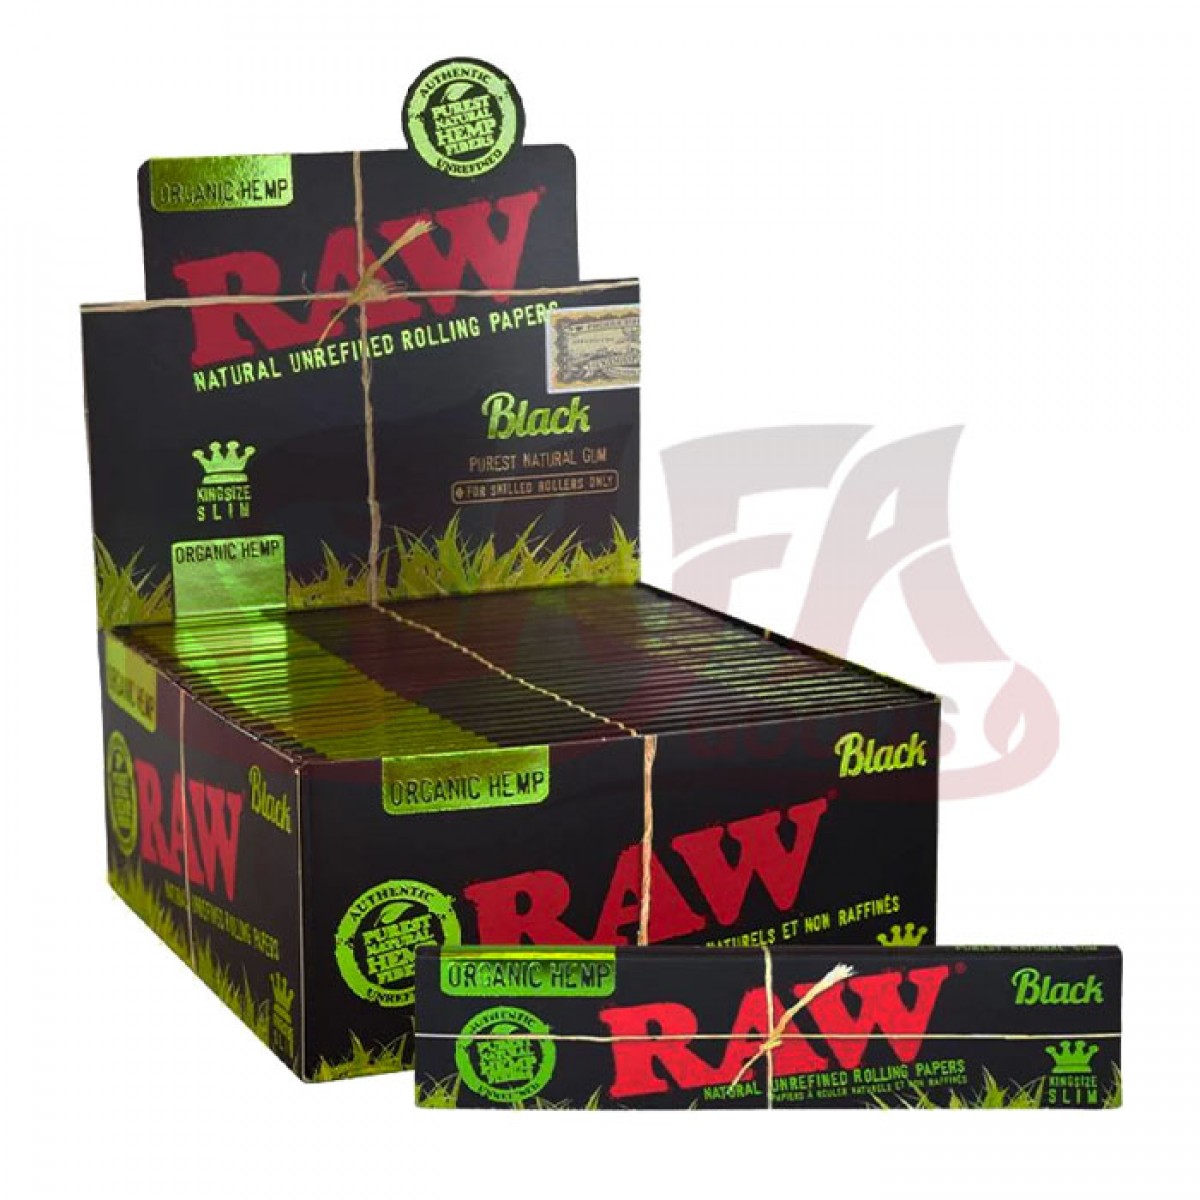 RAW Black Organic (King Size Slim) Hemp Rolling Papers - 50PC Box